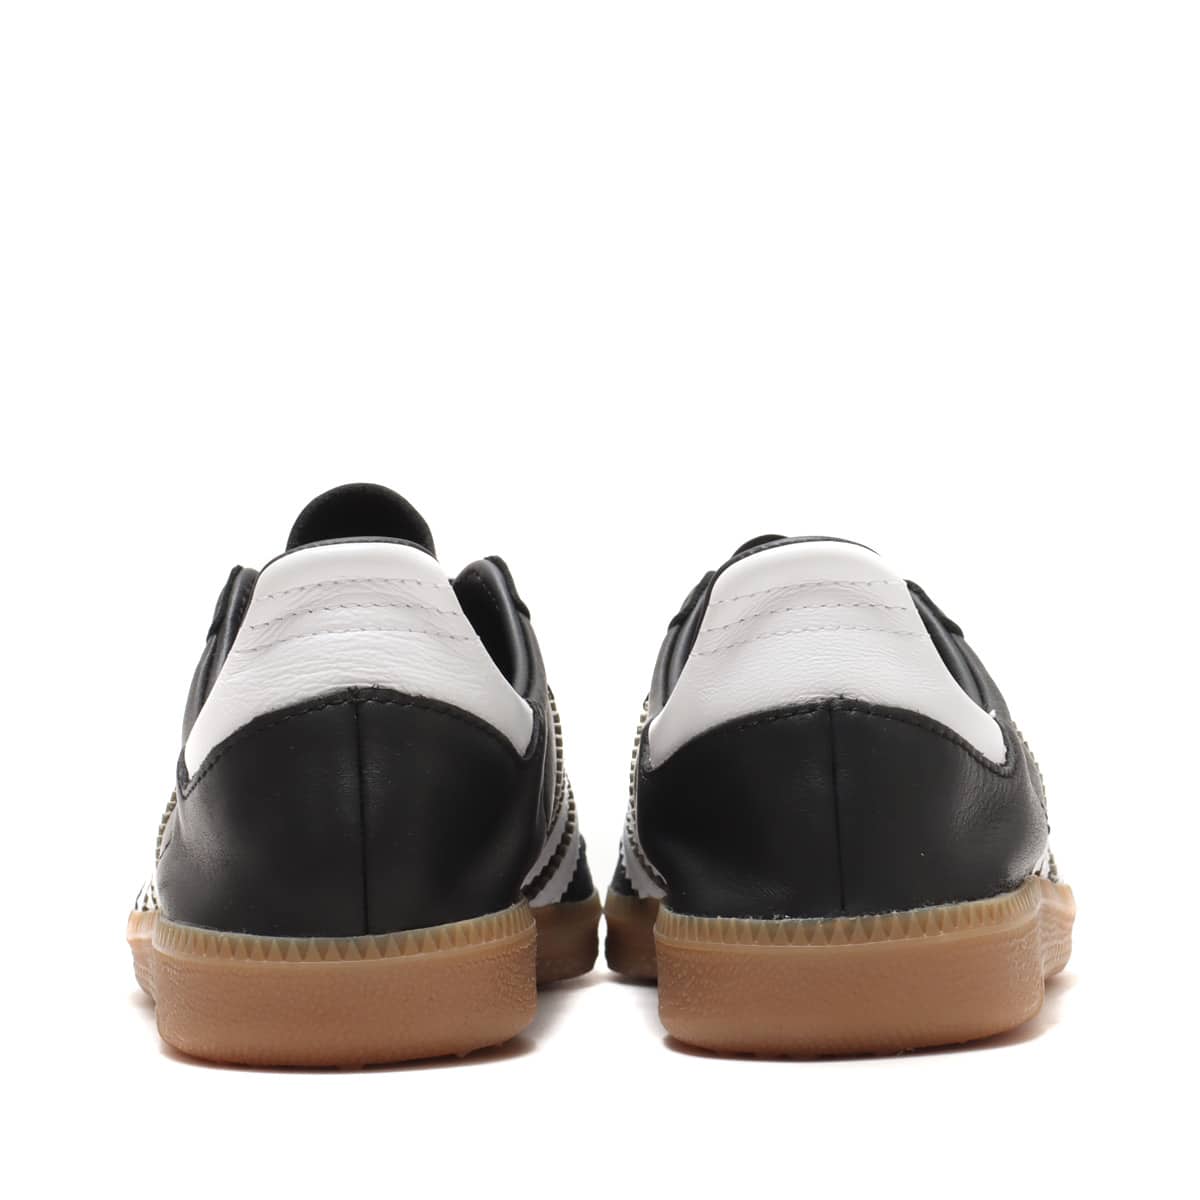 adidas SAMBA DECON CORE BLACK/FOOTWEAR WHITE/CORE BLACK